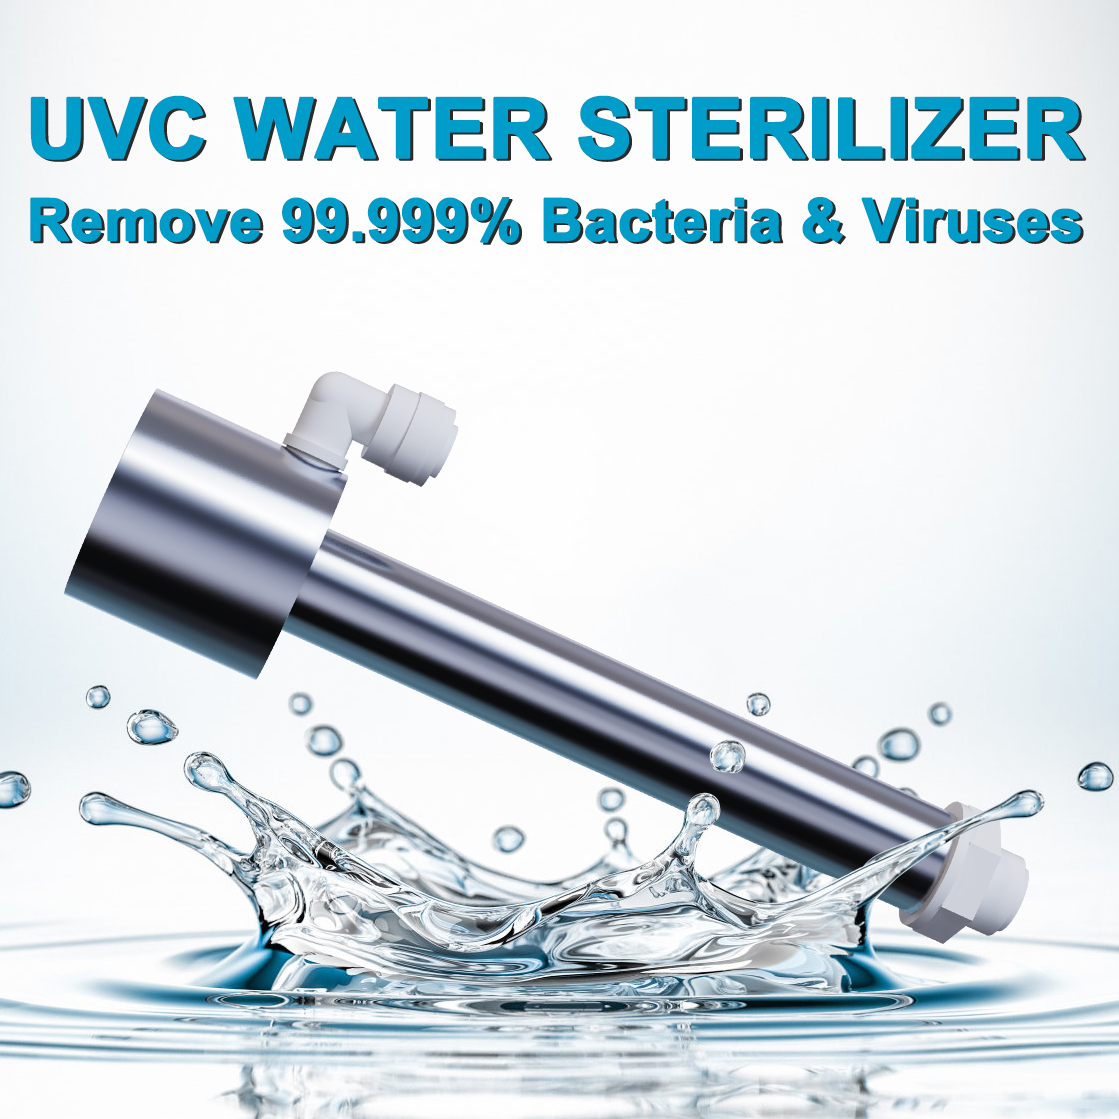 Revolutionary Innovative UVC fluid sterilization technologyRemove 99.9999% bacteria and viruses!Come and see more details...www.hc-hitech.com